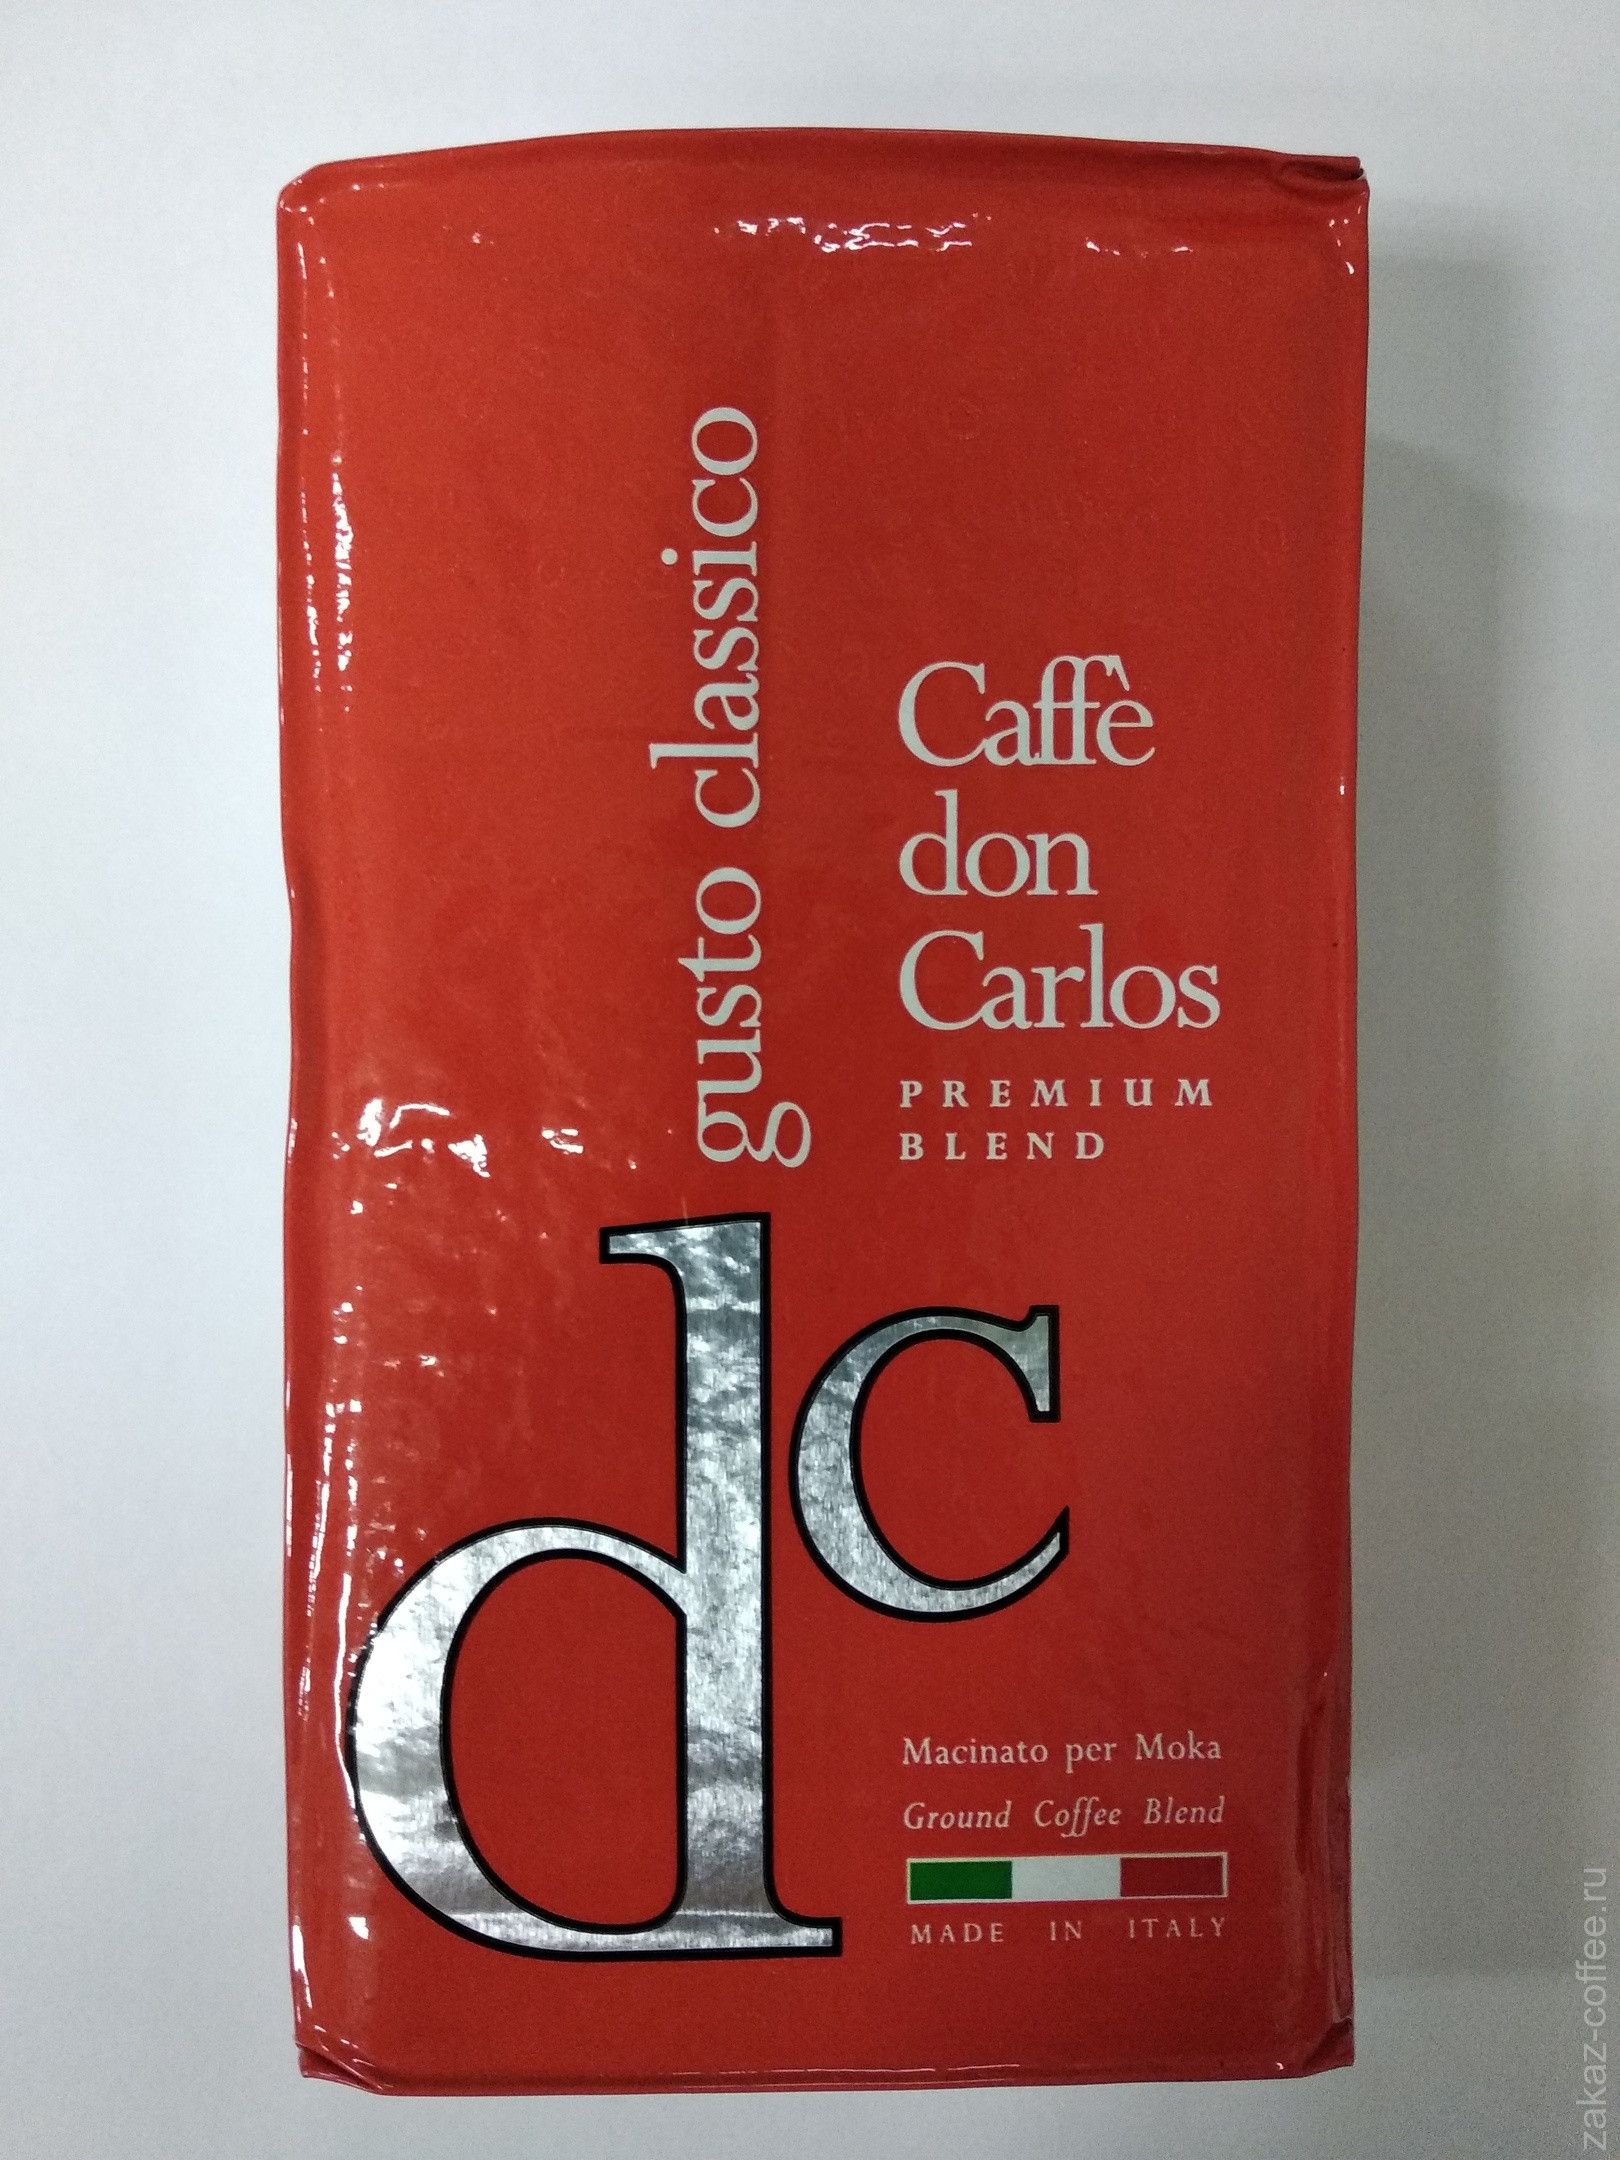 Don pello coffee